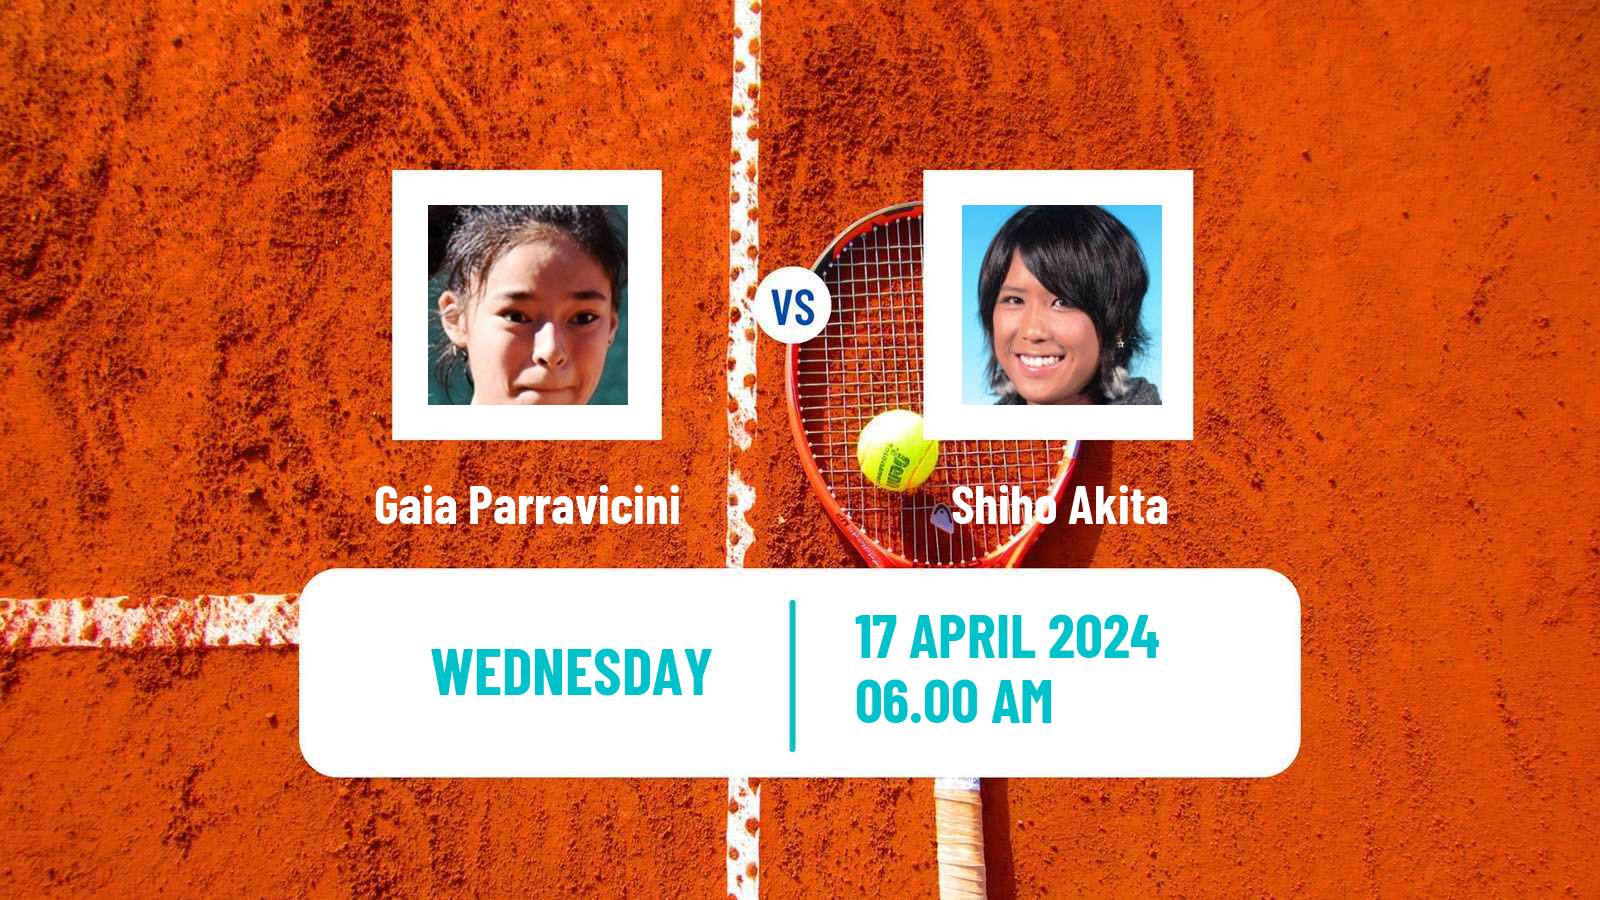 Tennis ITF W15 Monastir 14 Women Gaia Parravicini - Shiho Akita